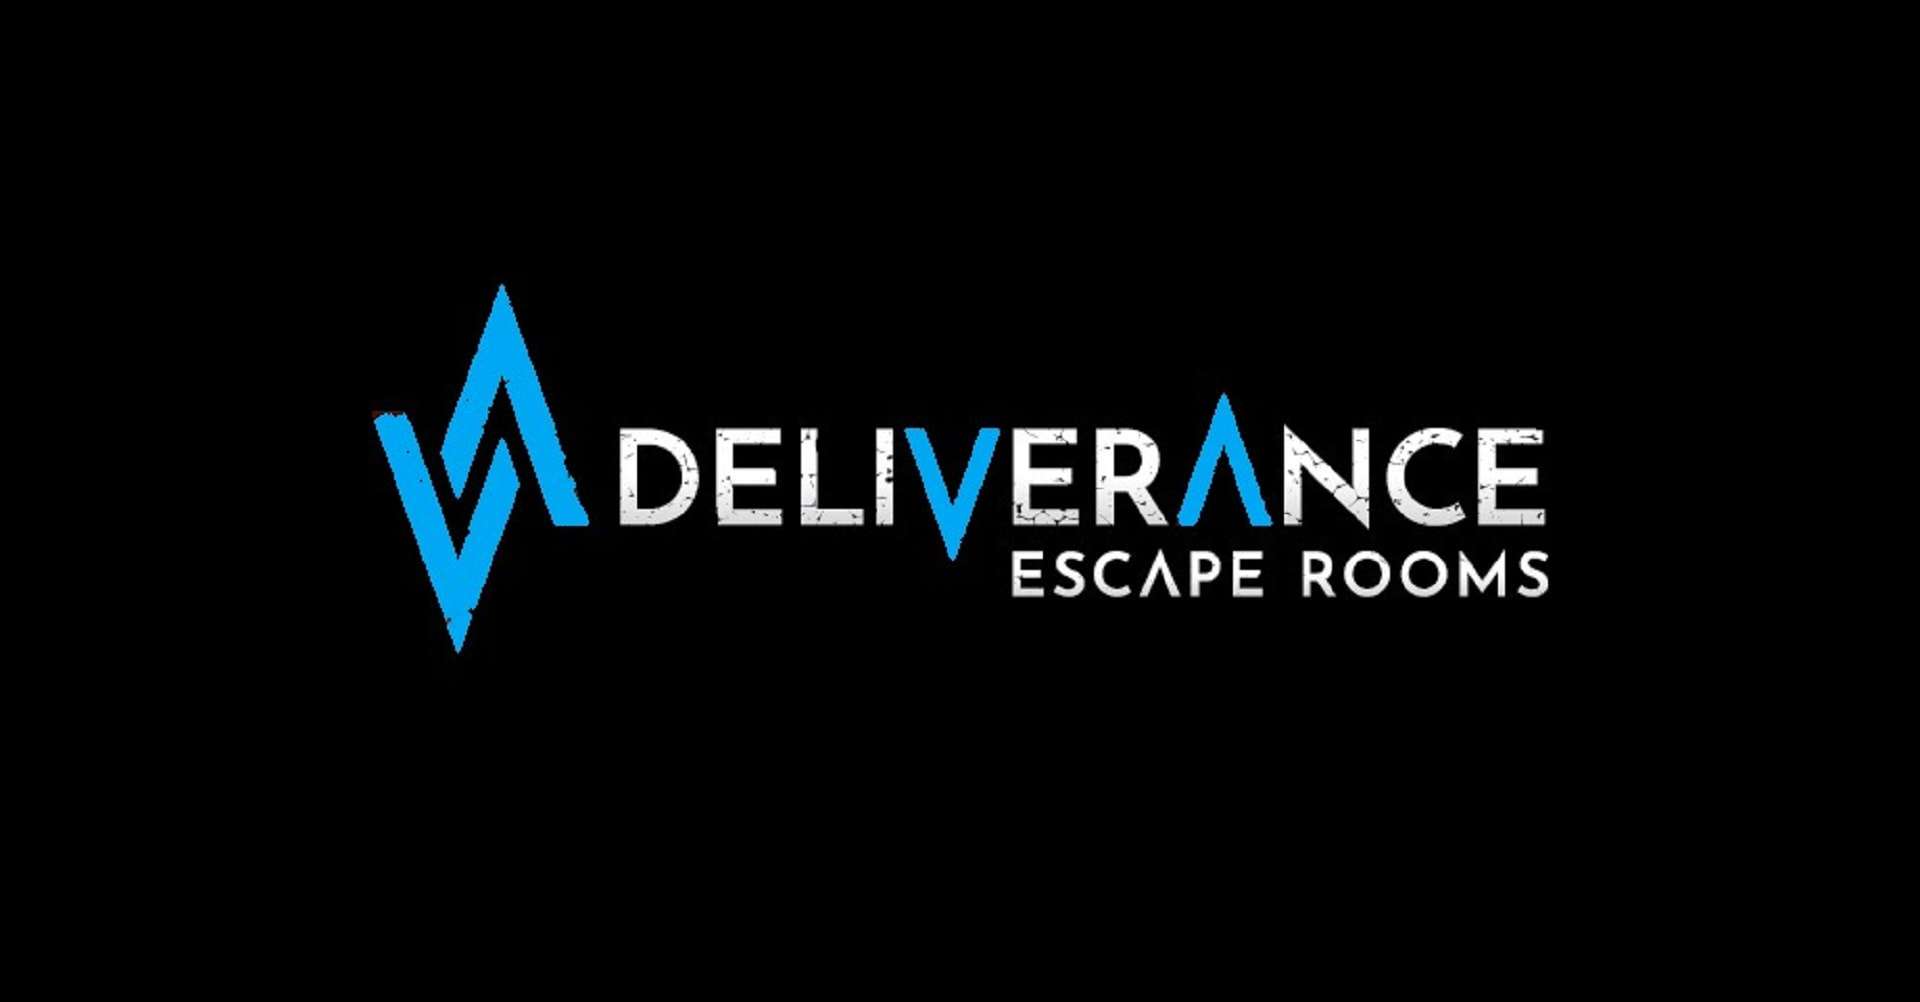 Deliverance Escape Rooms in UK